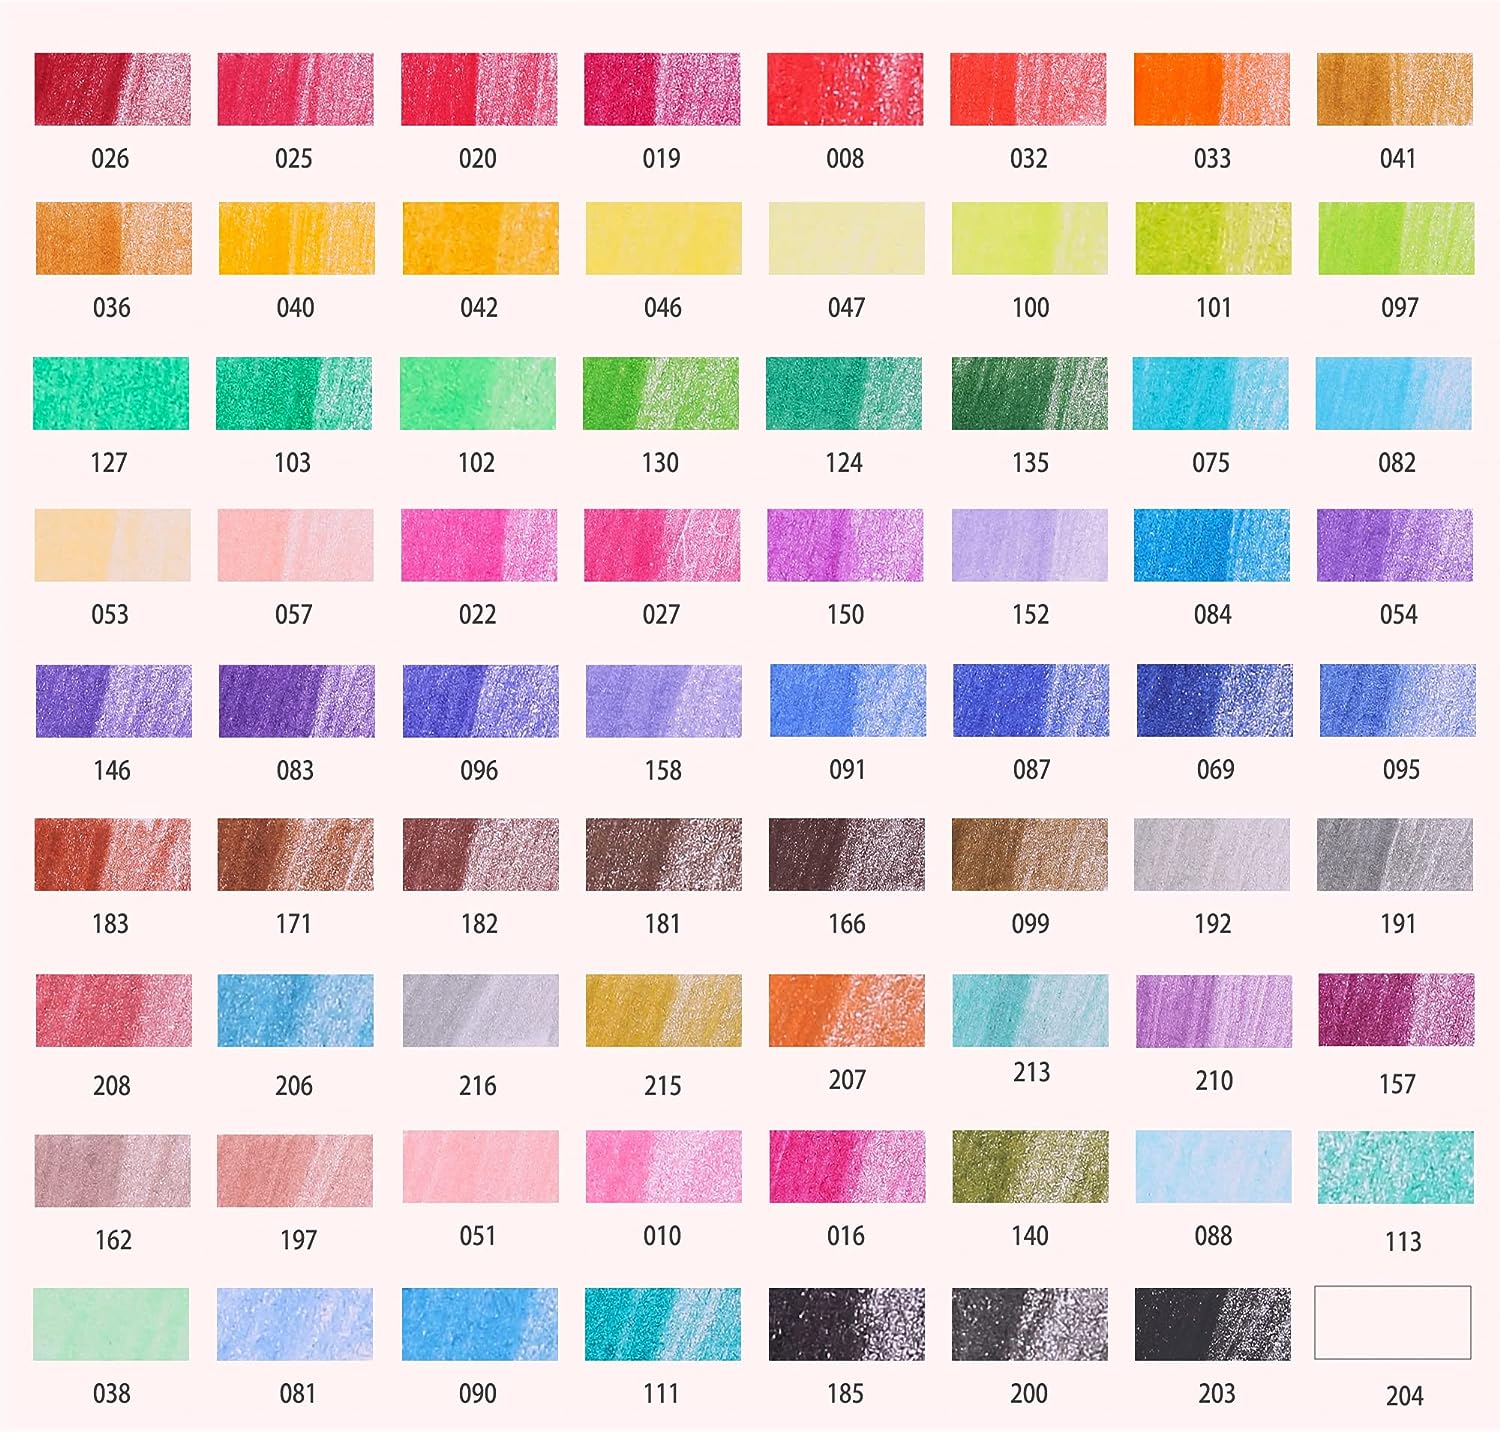 KALOUR 72 Count Colored Pencils for Adult Coloring Books, Soft Core